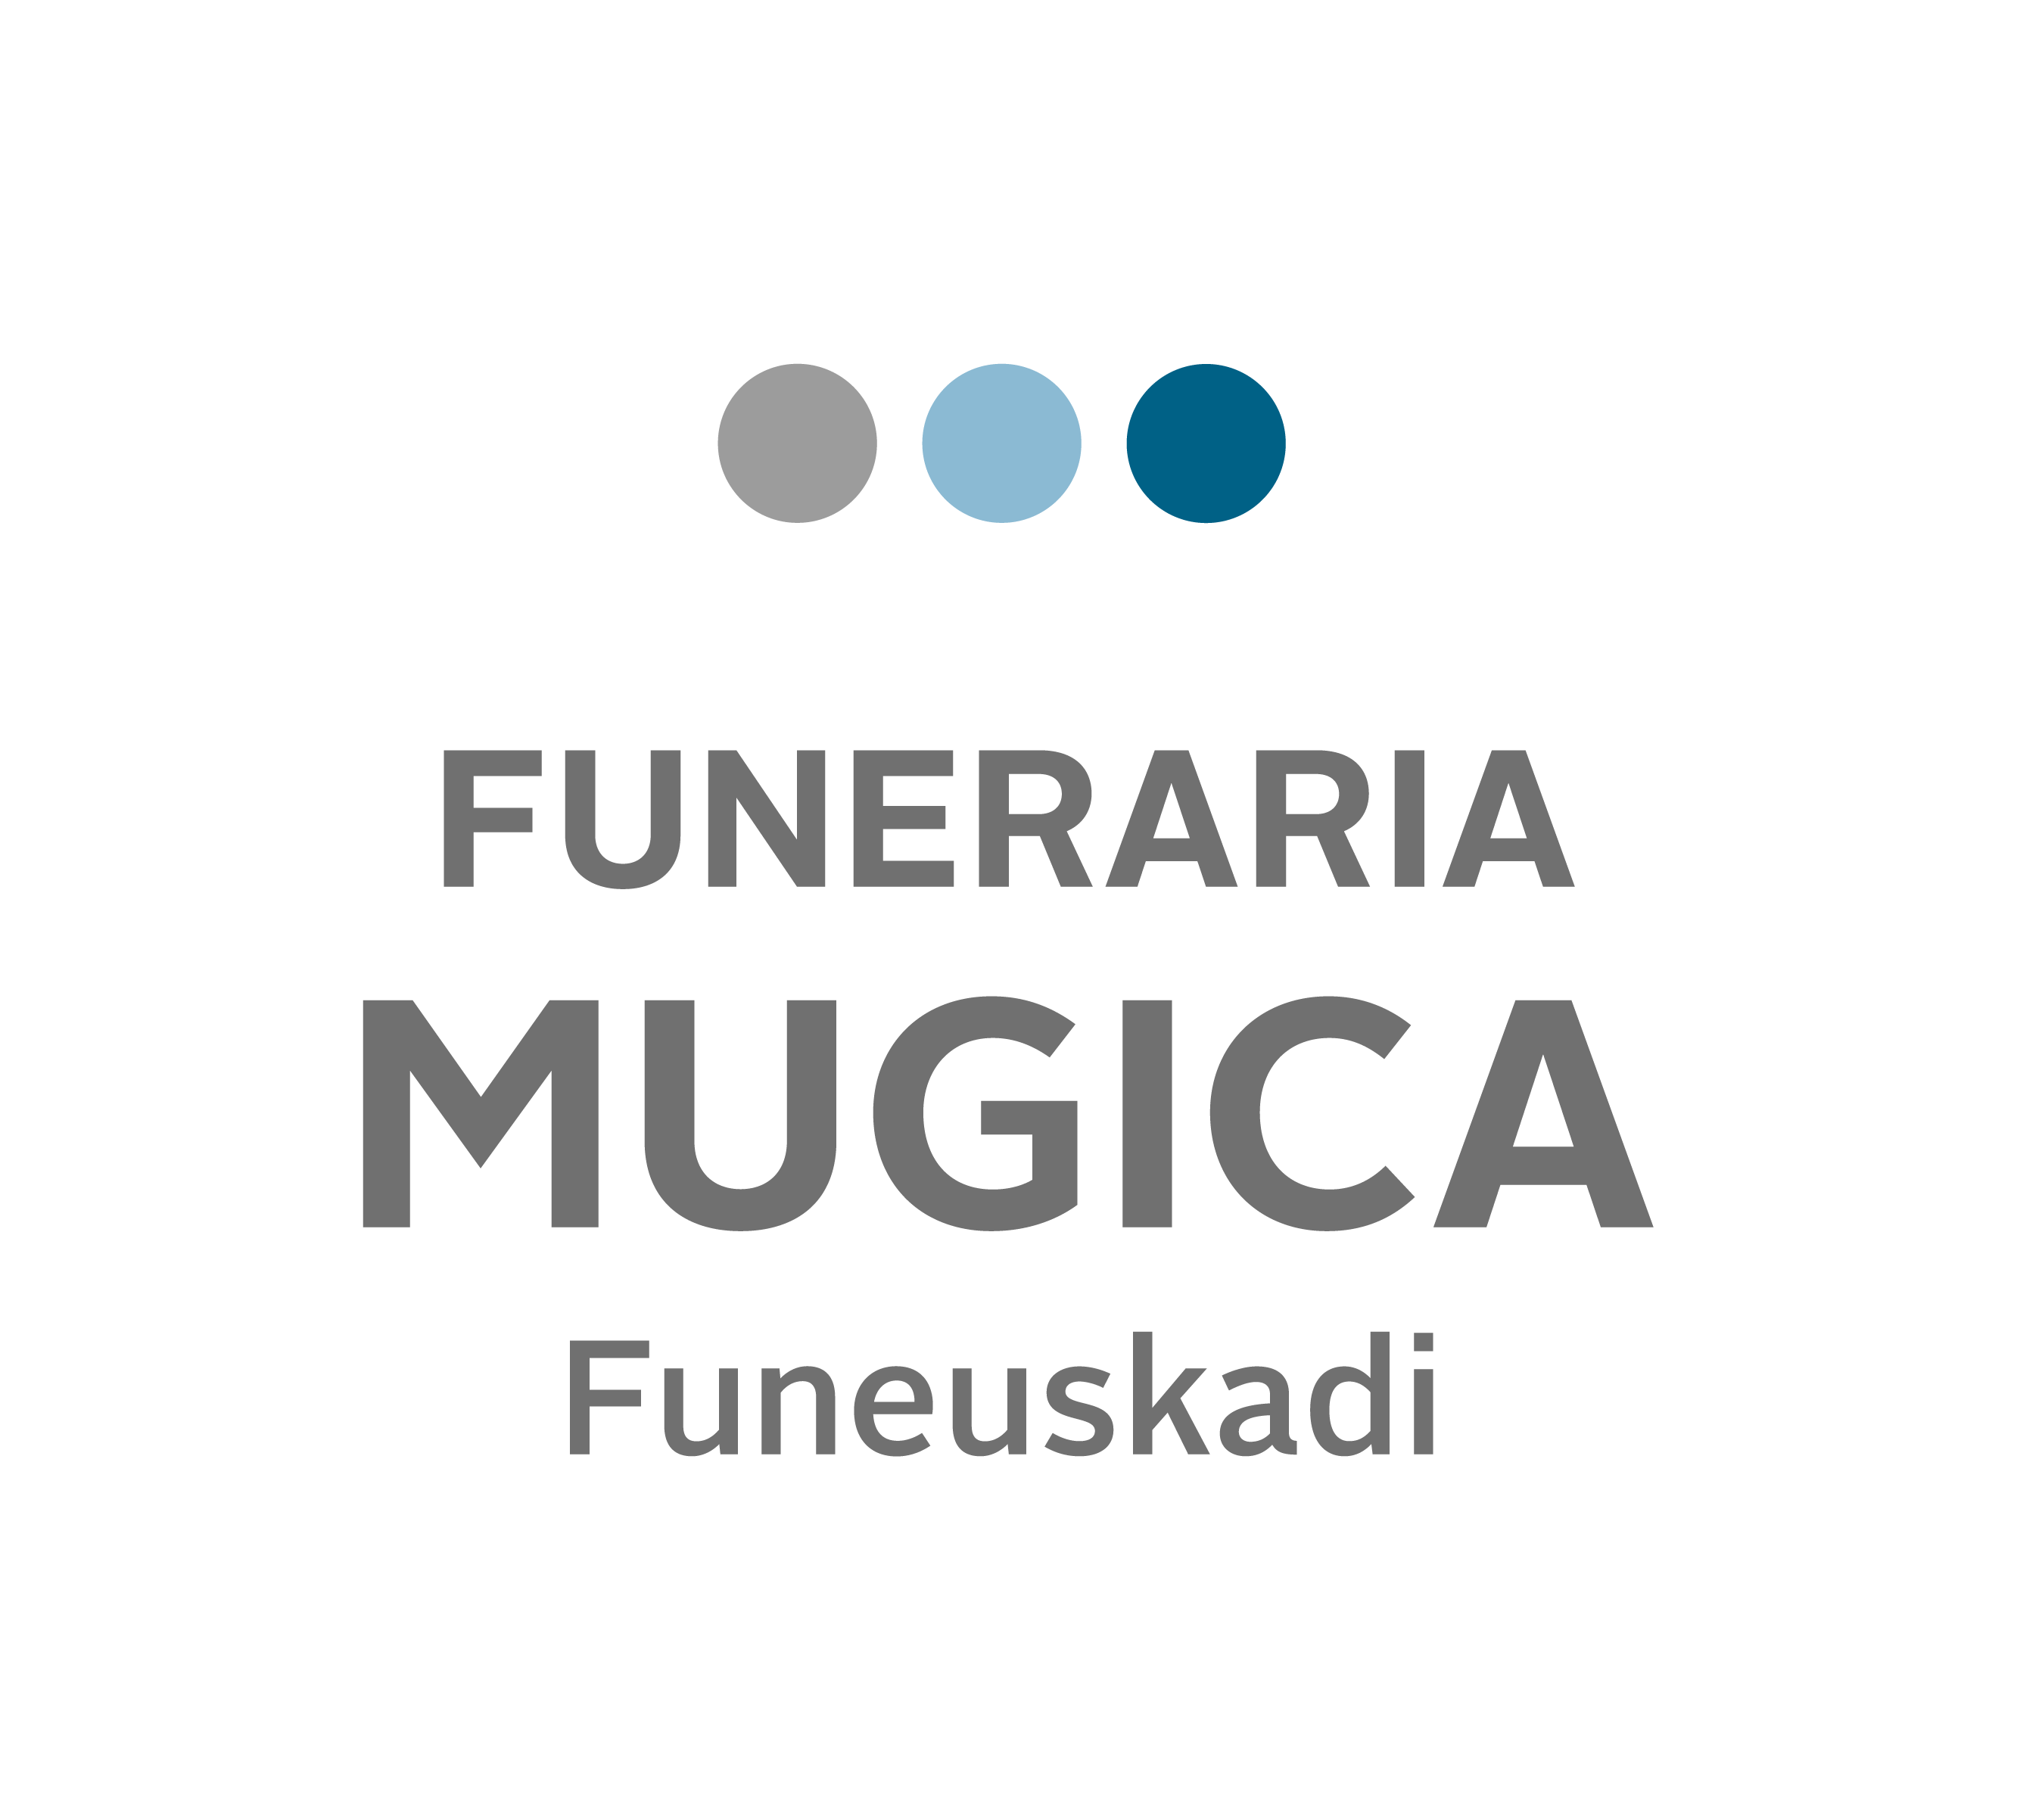 FUNERARIA ERMUA. FUNEUSKADI 900535910